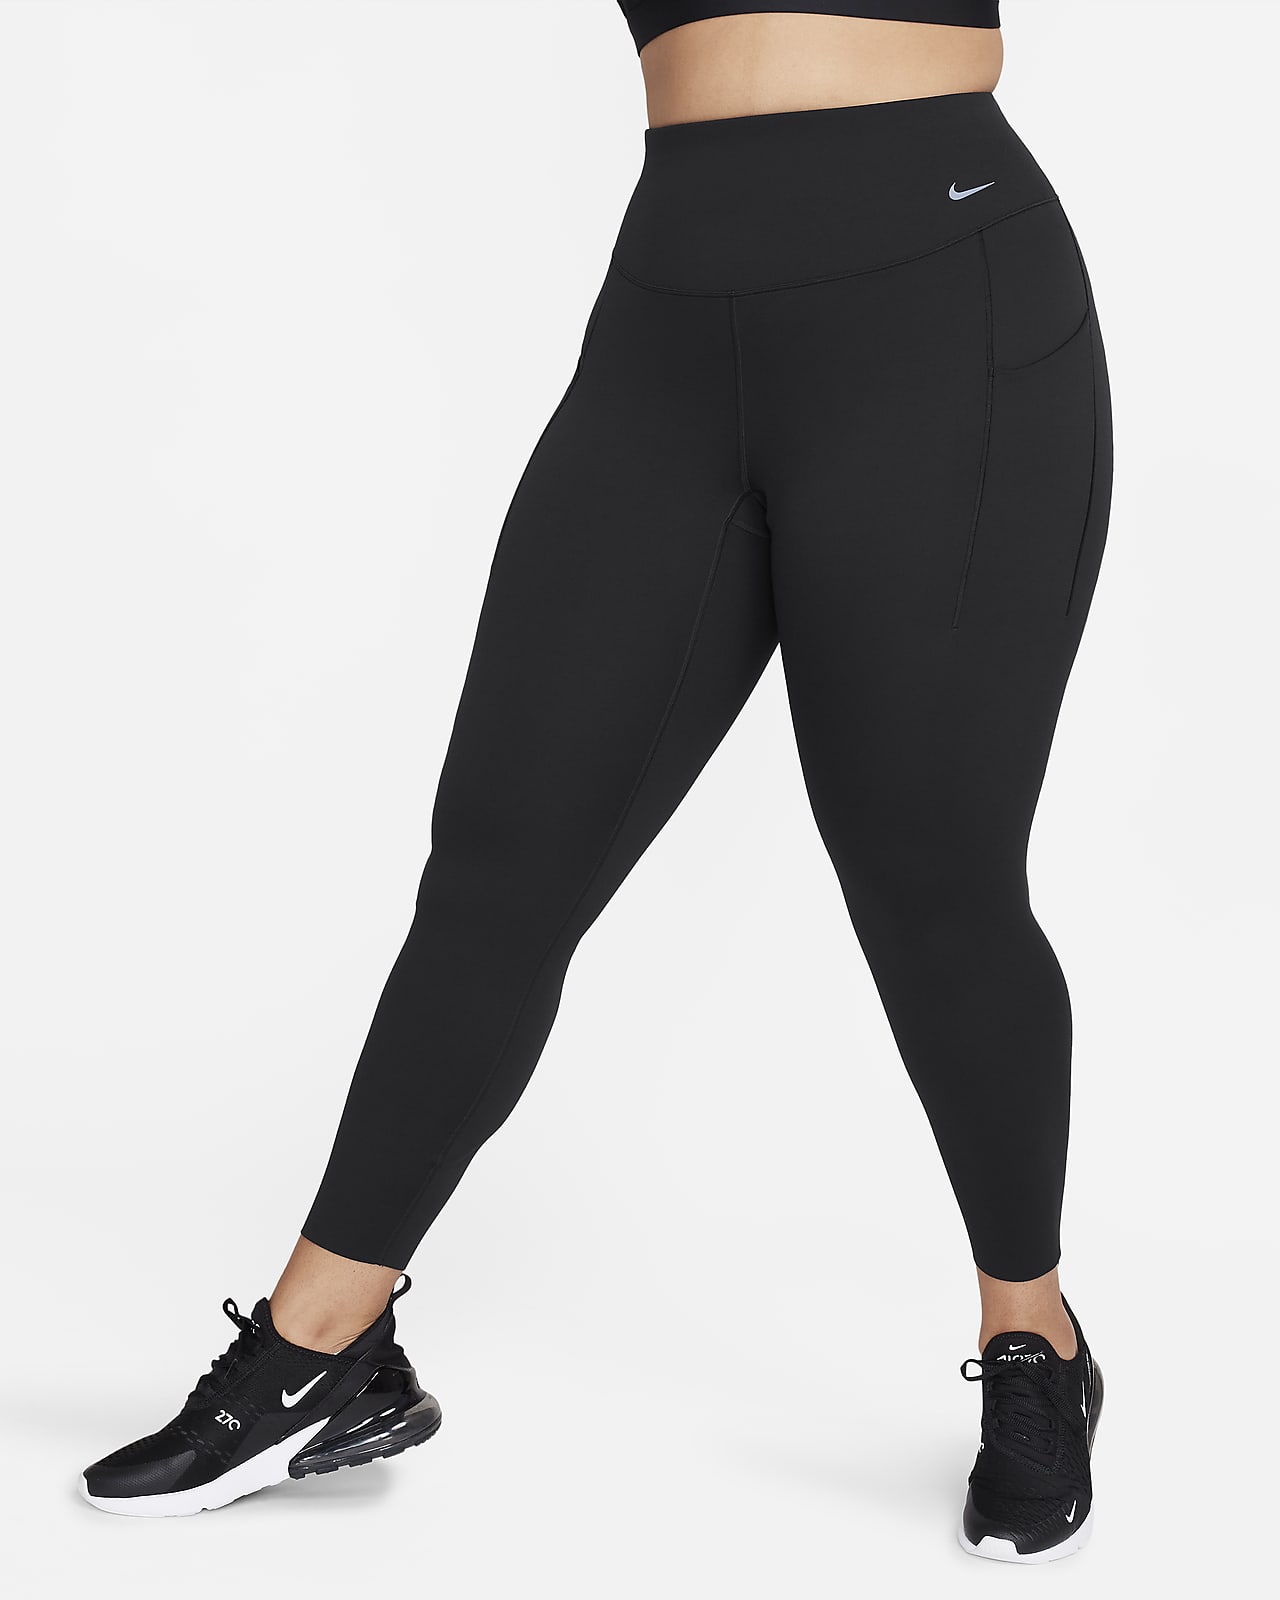 Latest Nike Leggings & Churidars arrivals - Women - 11 products